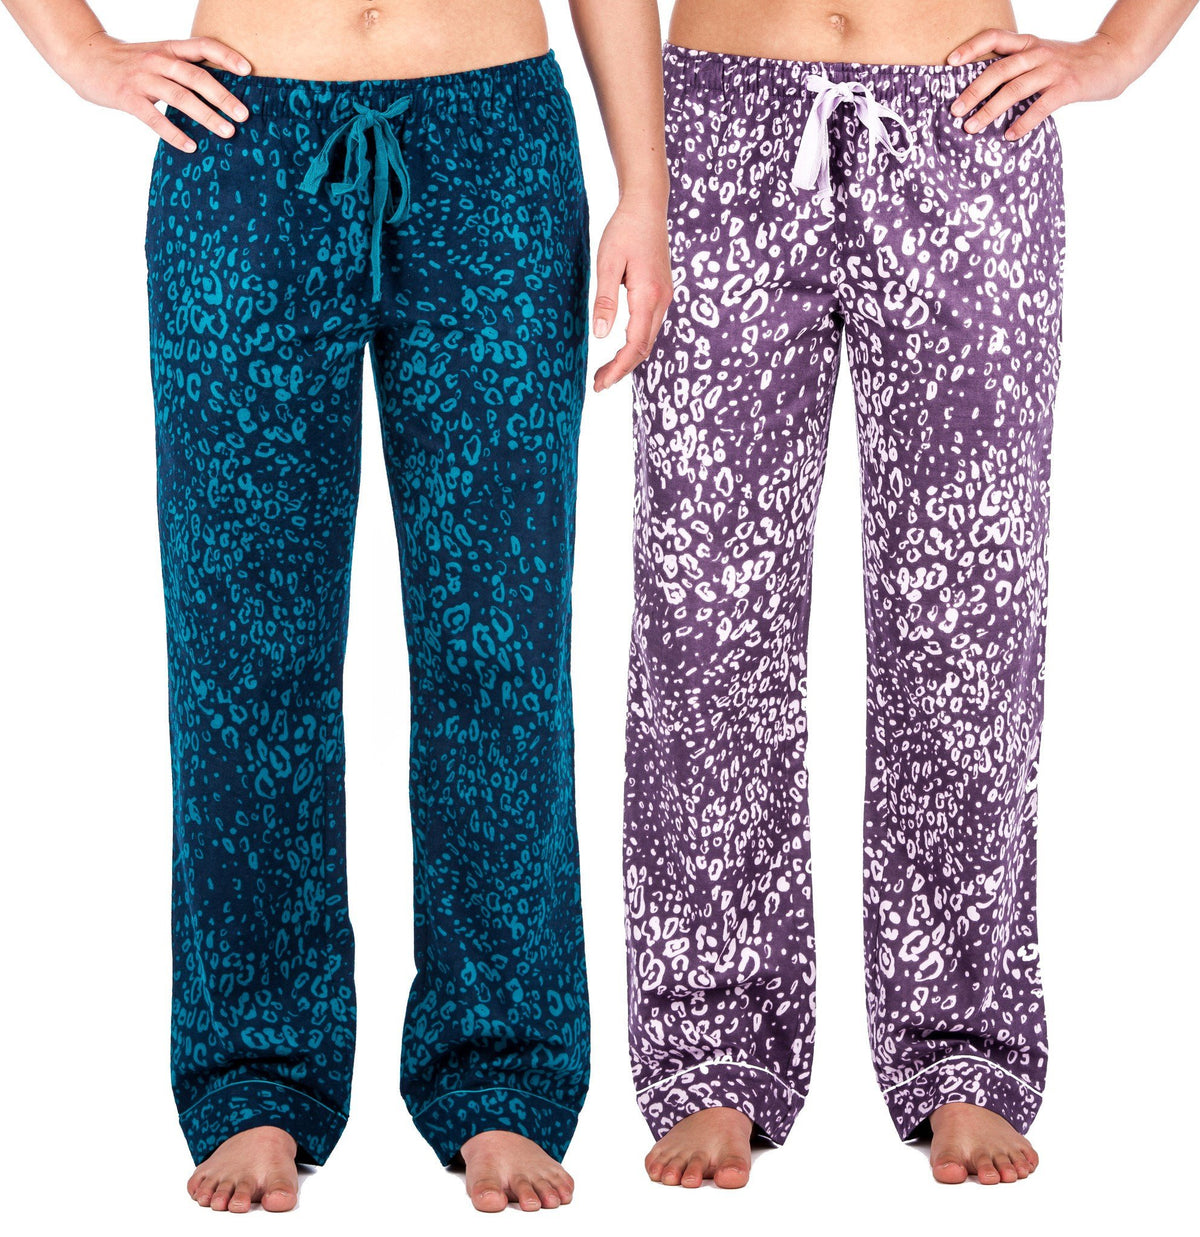 Women's 100% Cotton Flannel Lounge Pants (2-Pack) - Relaxed Fit - Leopard Purple/Blue